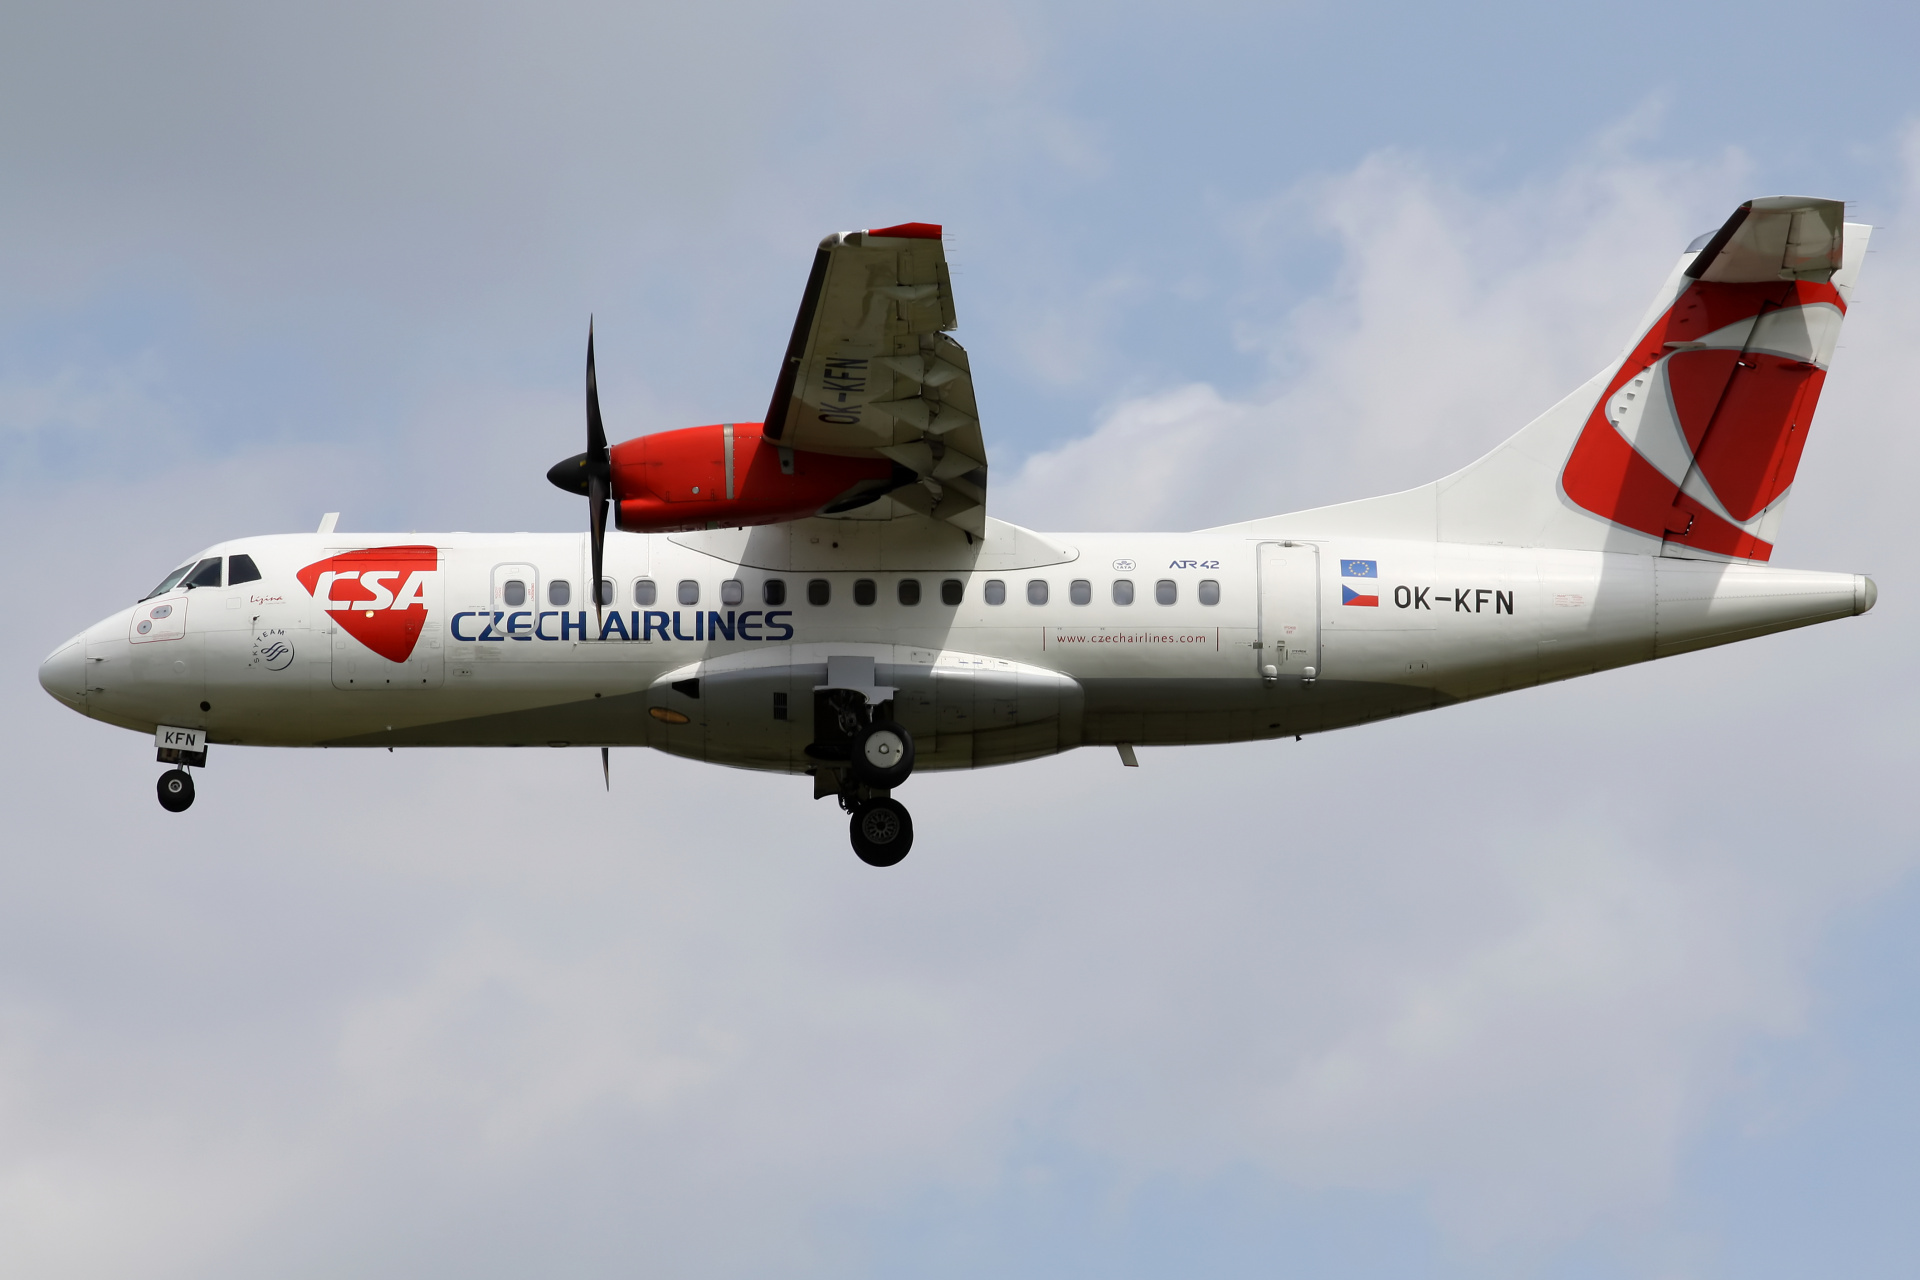 OK-KFN (Samoloty » Spotting na EPWA » ATR 42 » CSA Czech Airlines)